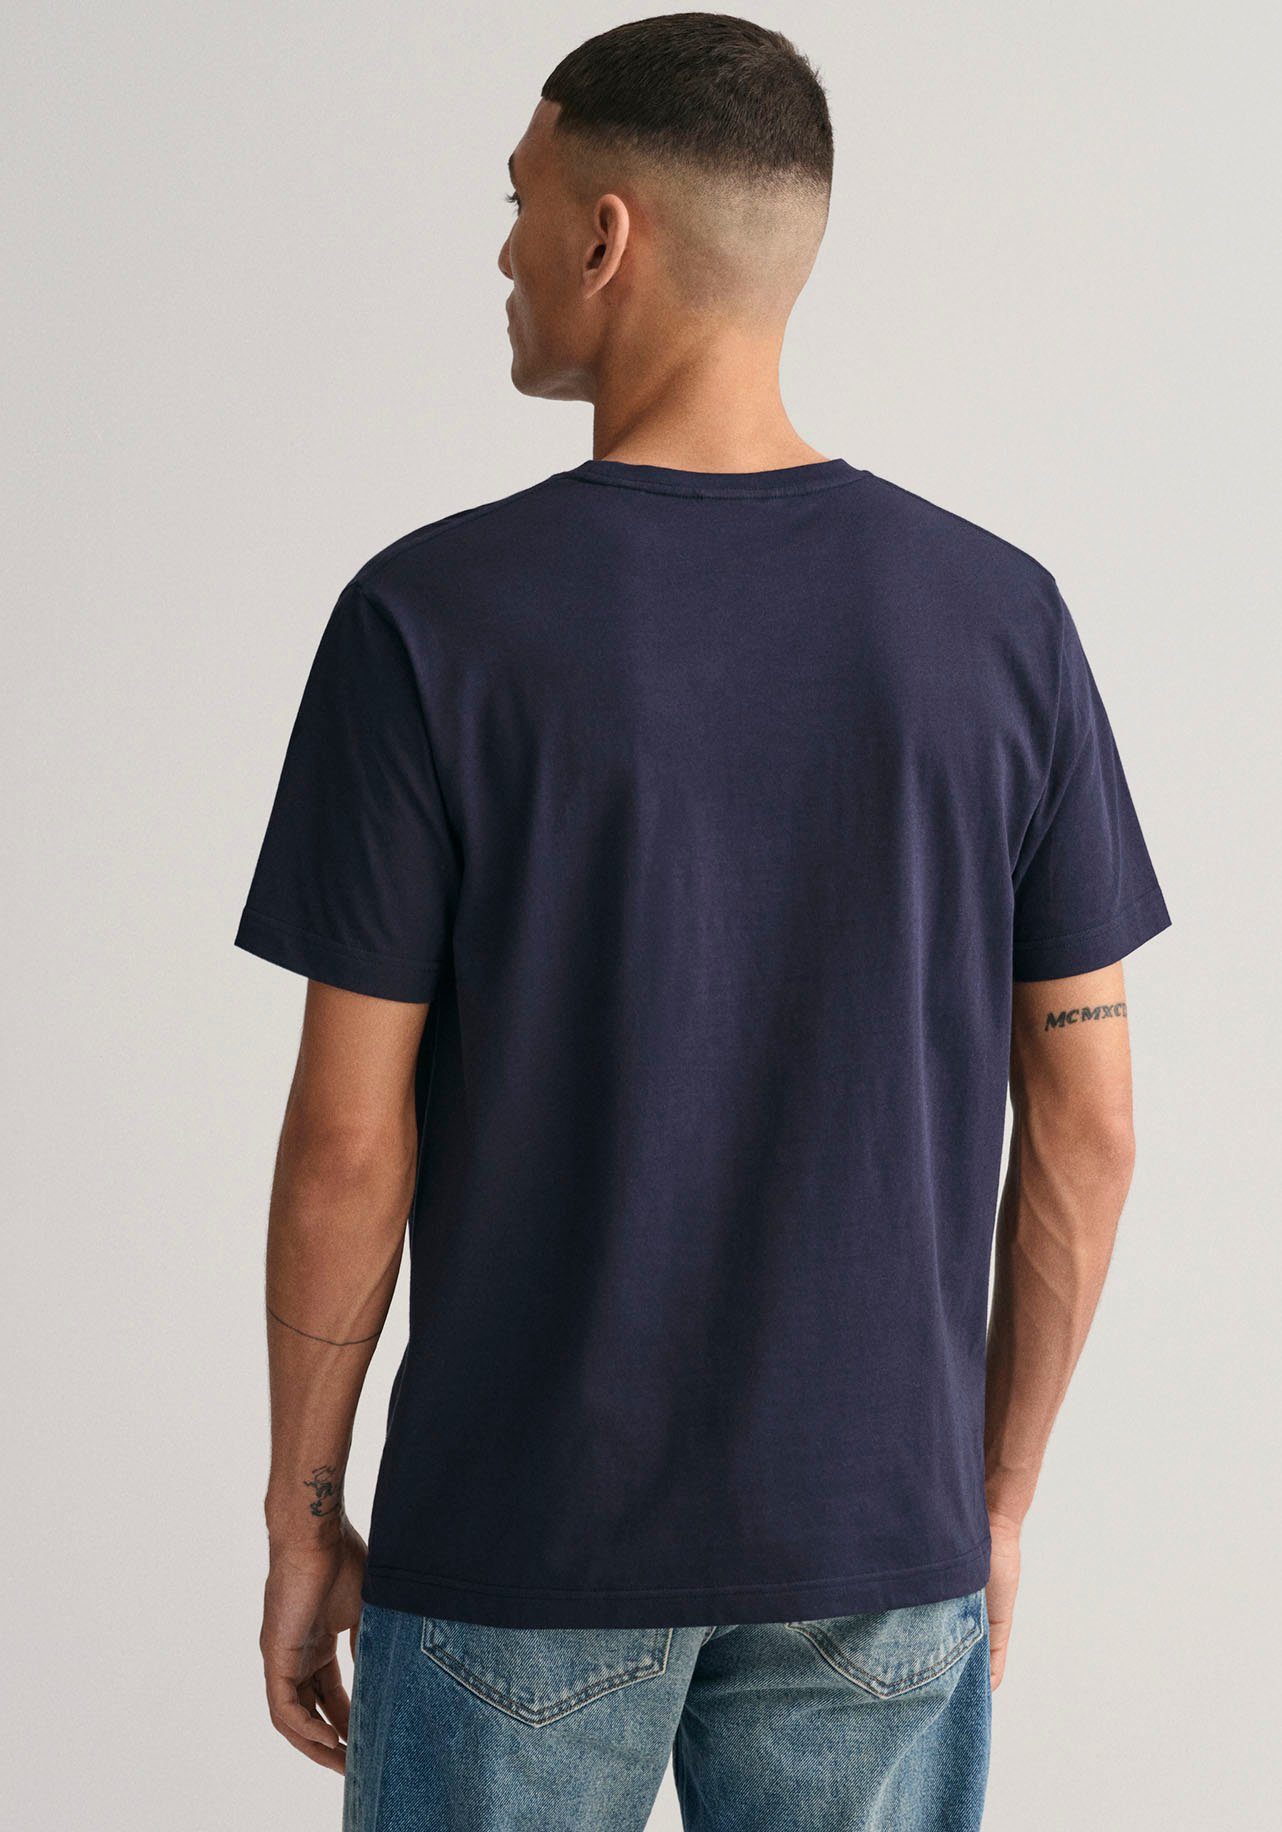 Gant T-Shirt REG ARCHIVE SHIELD SS den 1980er-Jahren dem aus T-SHIRT Archiv von inspiriert EMB blue evening